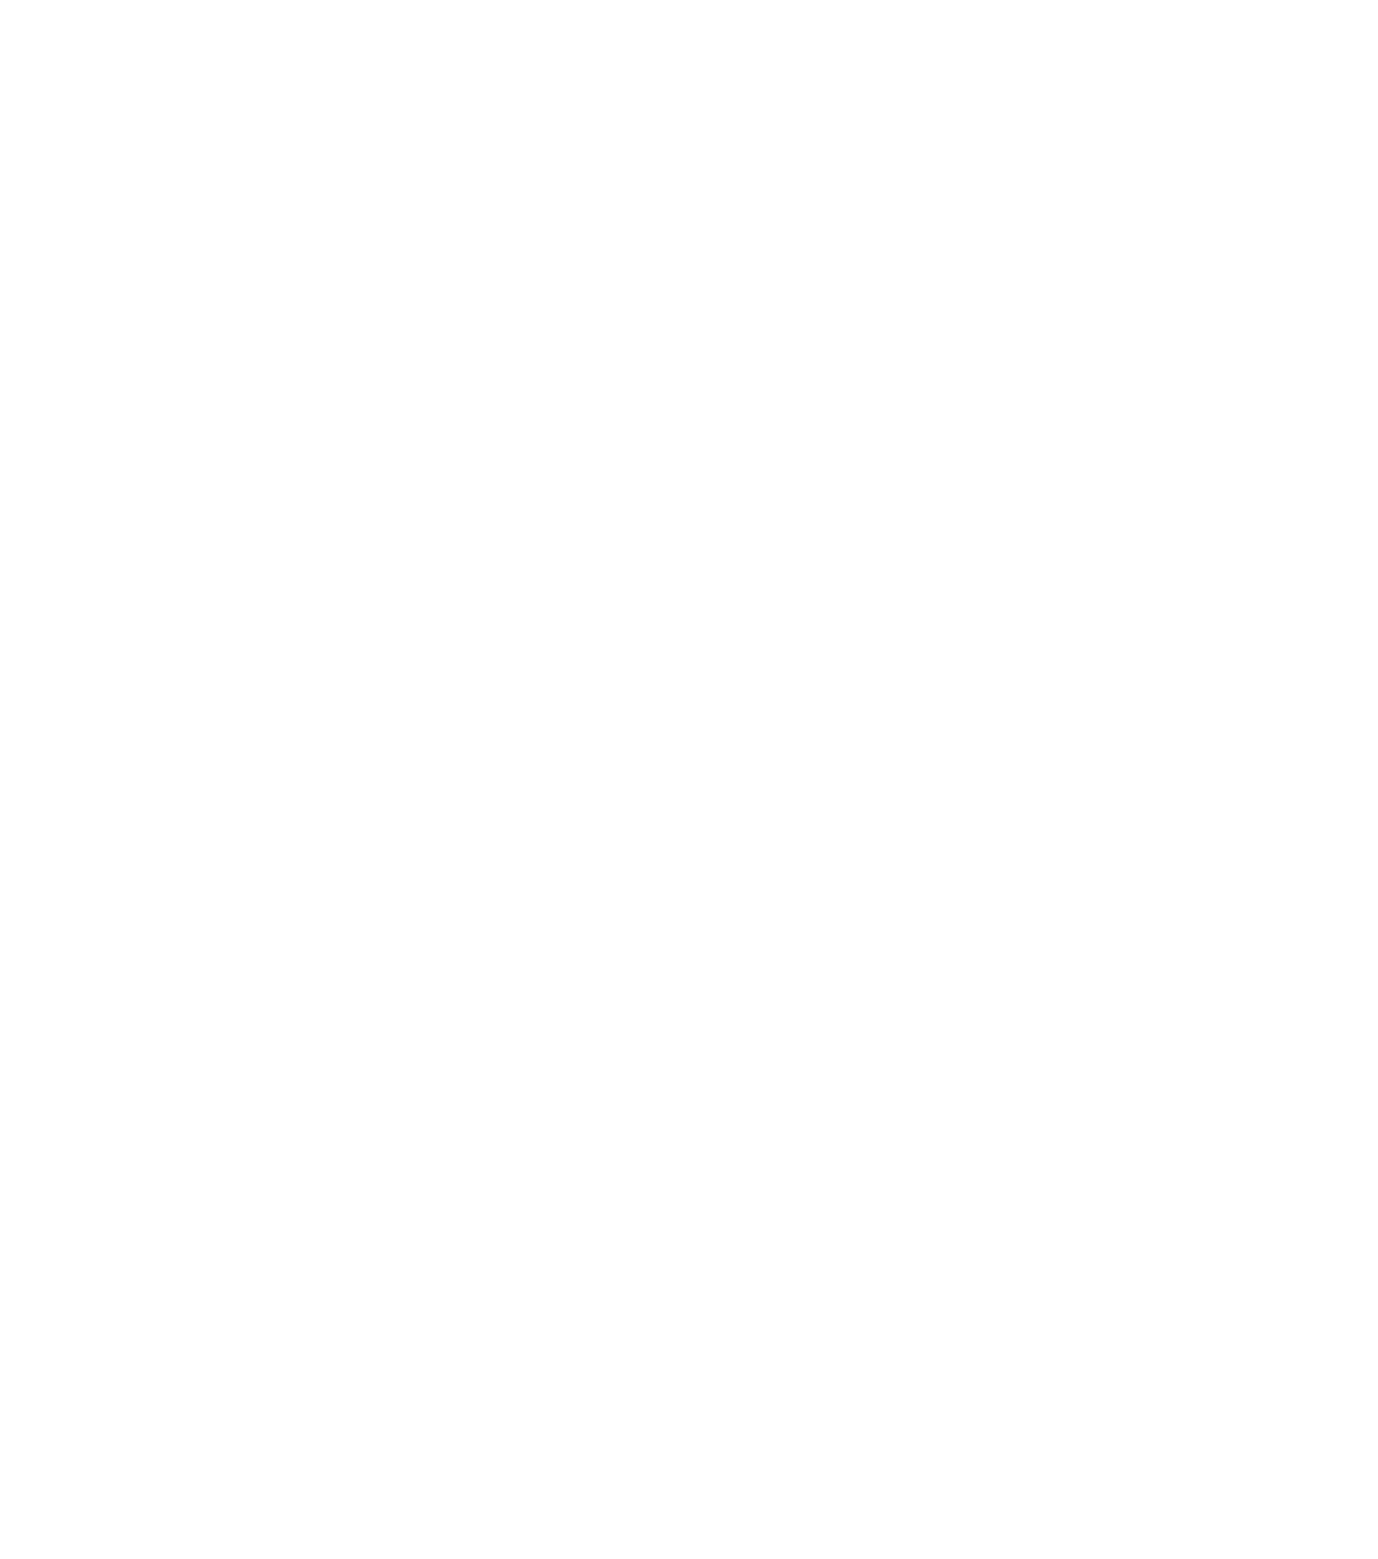 Kuwait Projects Company Holding logo pour fonds sombres (PNG transparent)